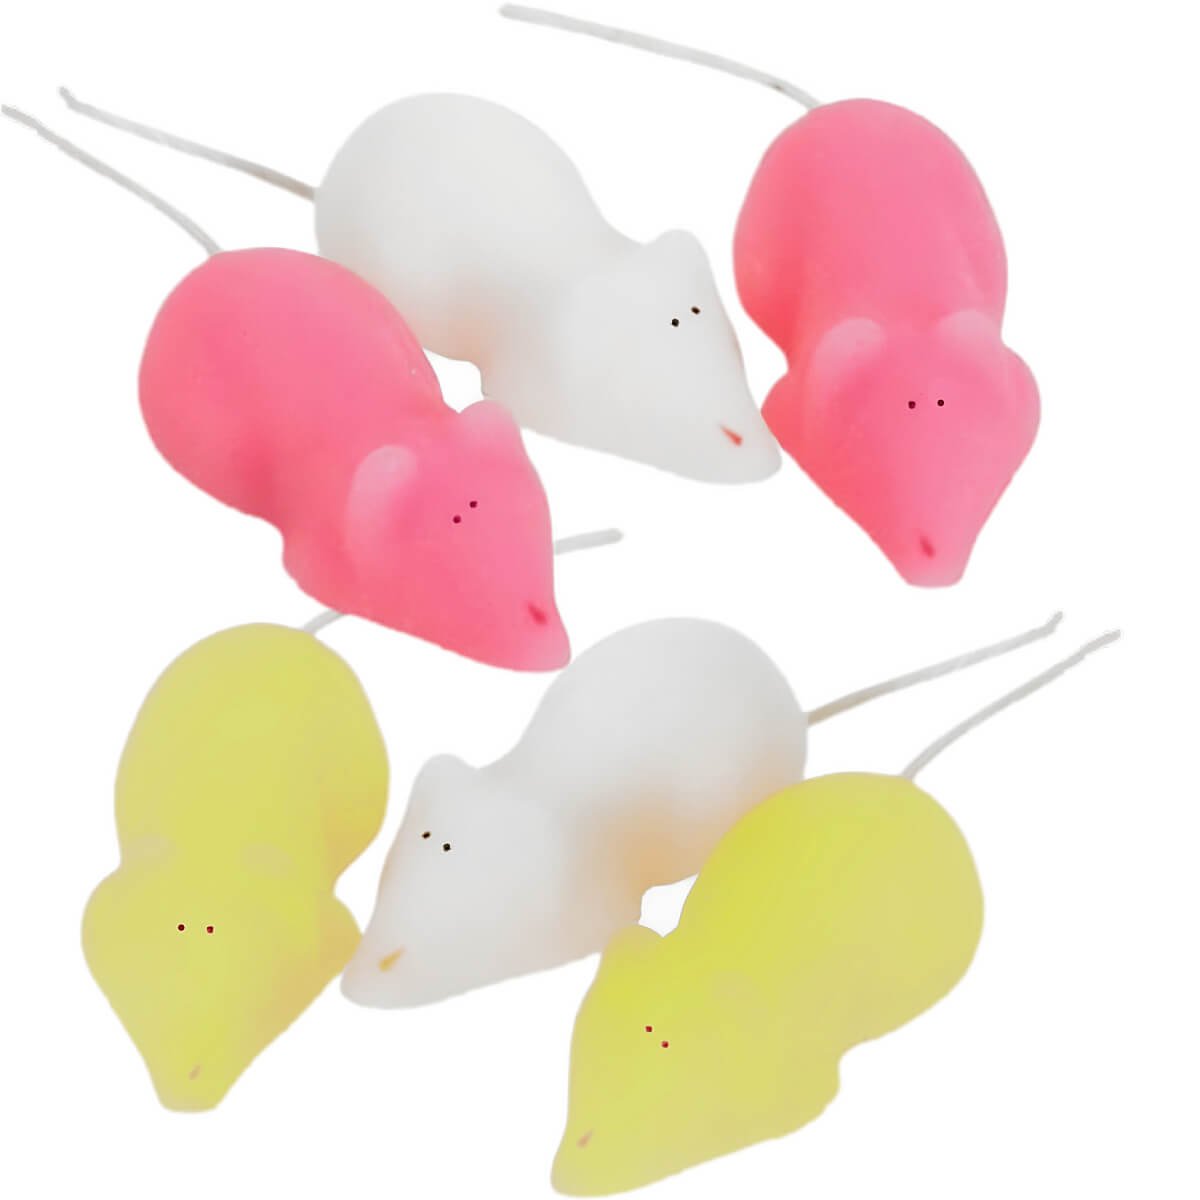 Six Sugar Mice, pink, white and yellow.